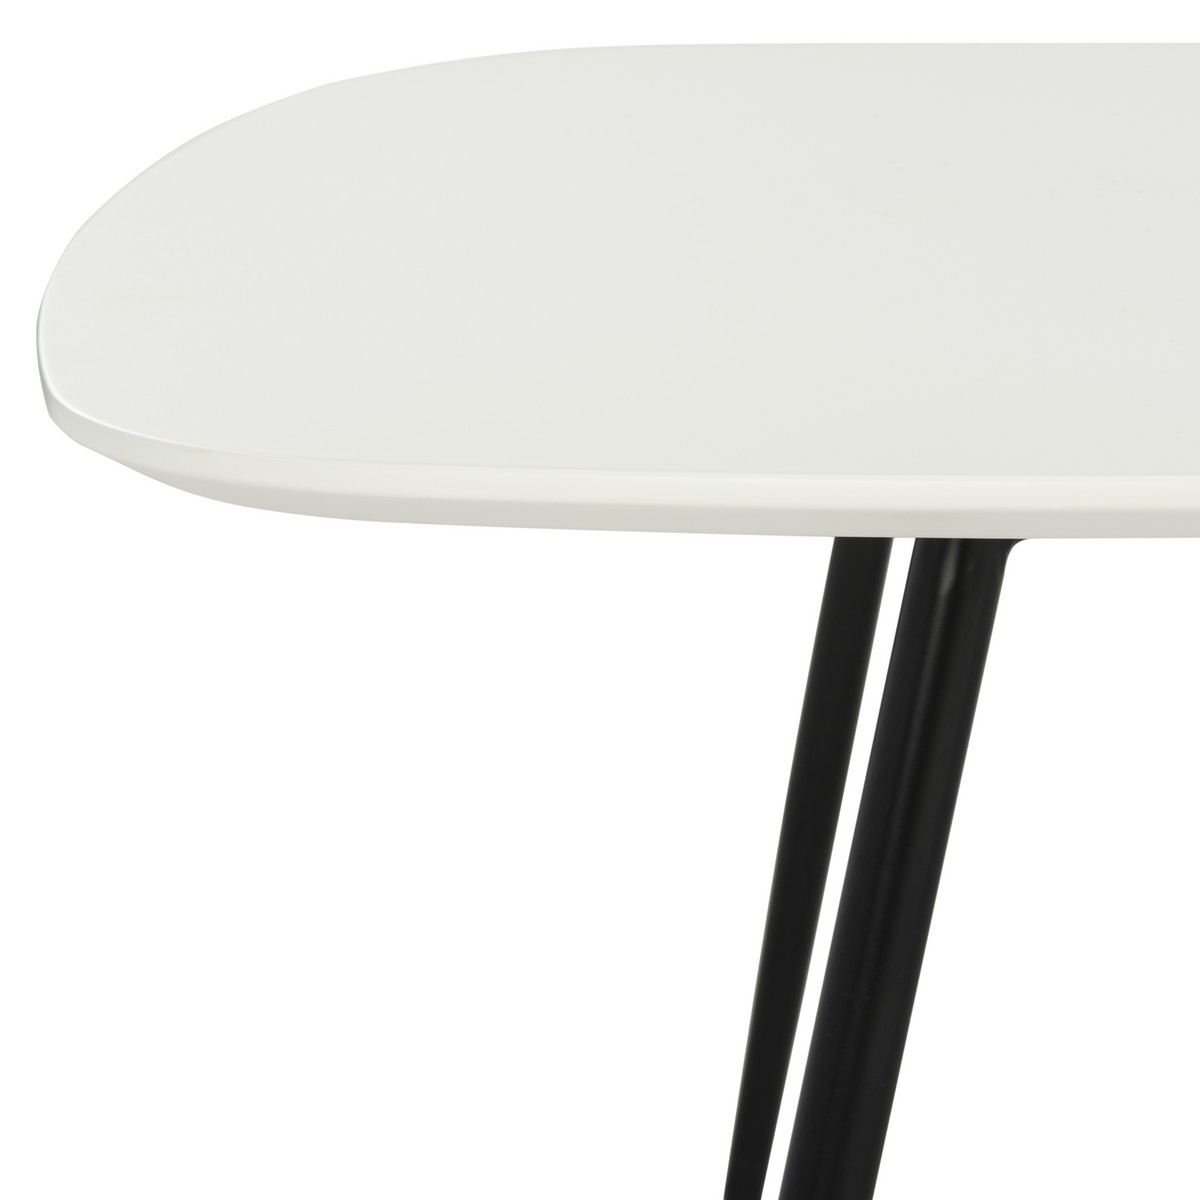 Jasmine Bi Level Coffee Table - White/Grey - Arlo Home - Image 5